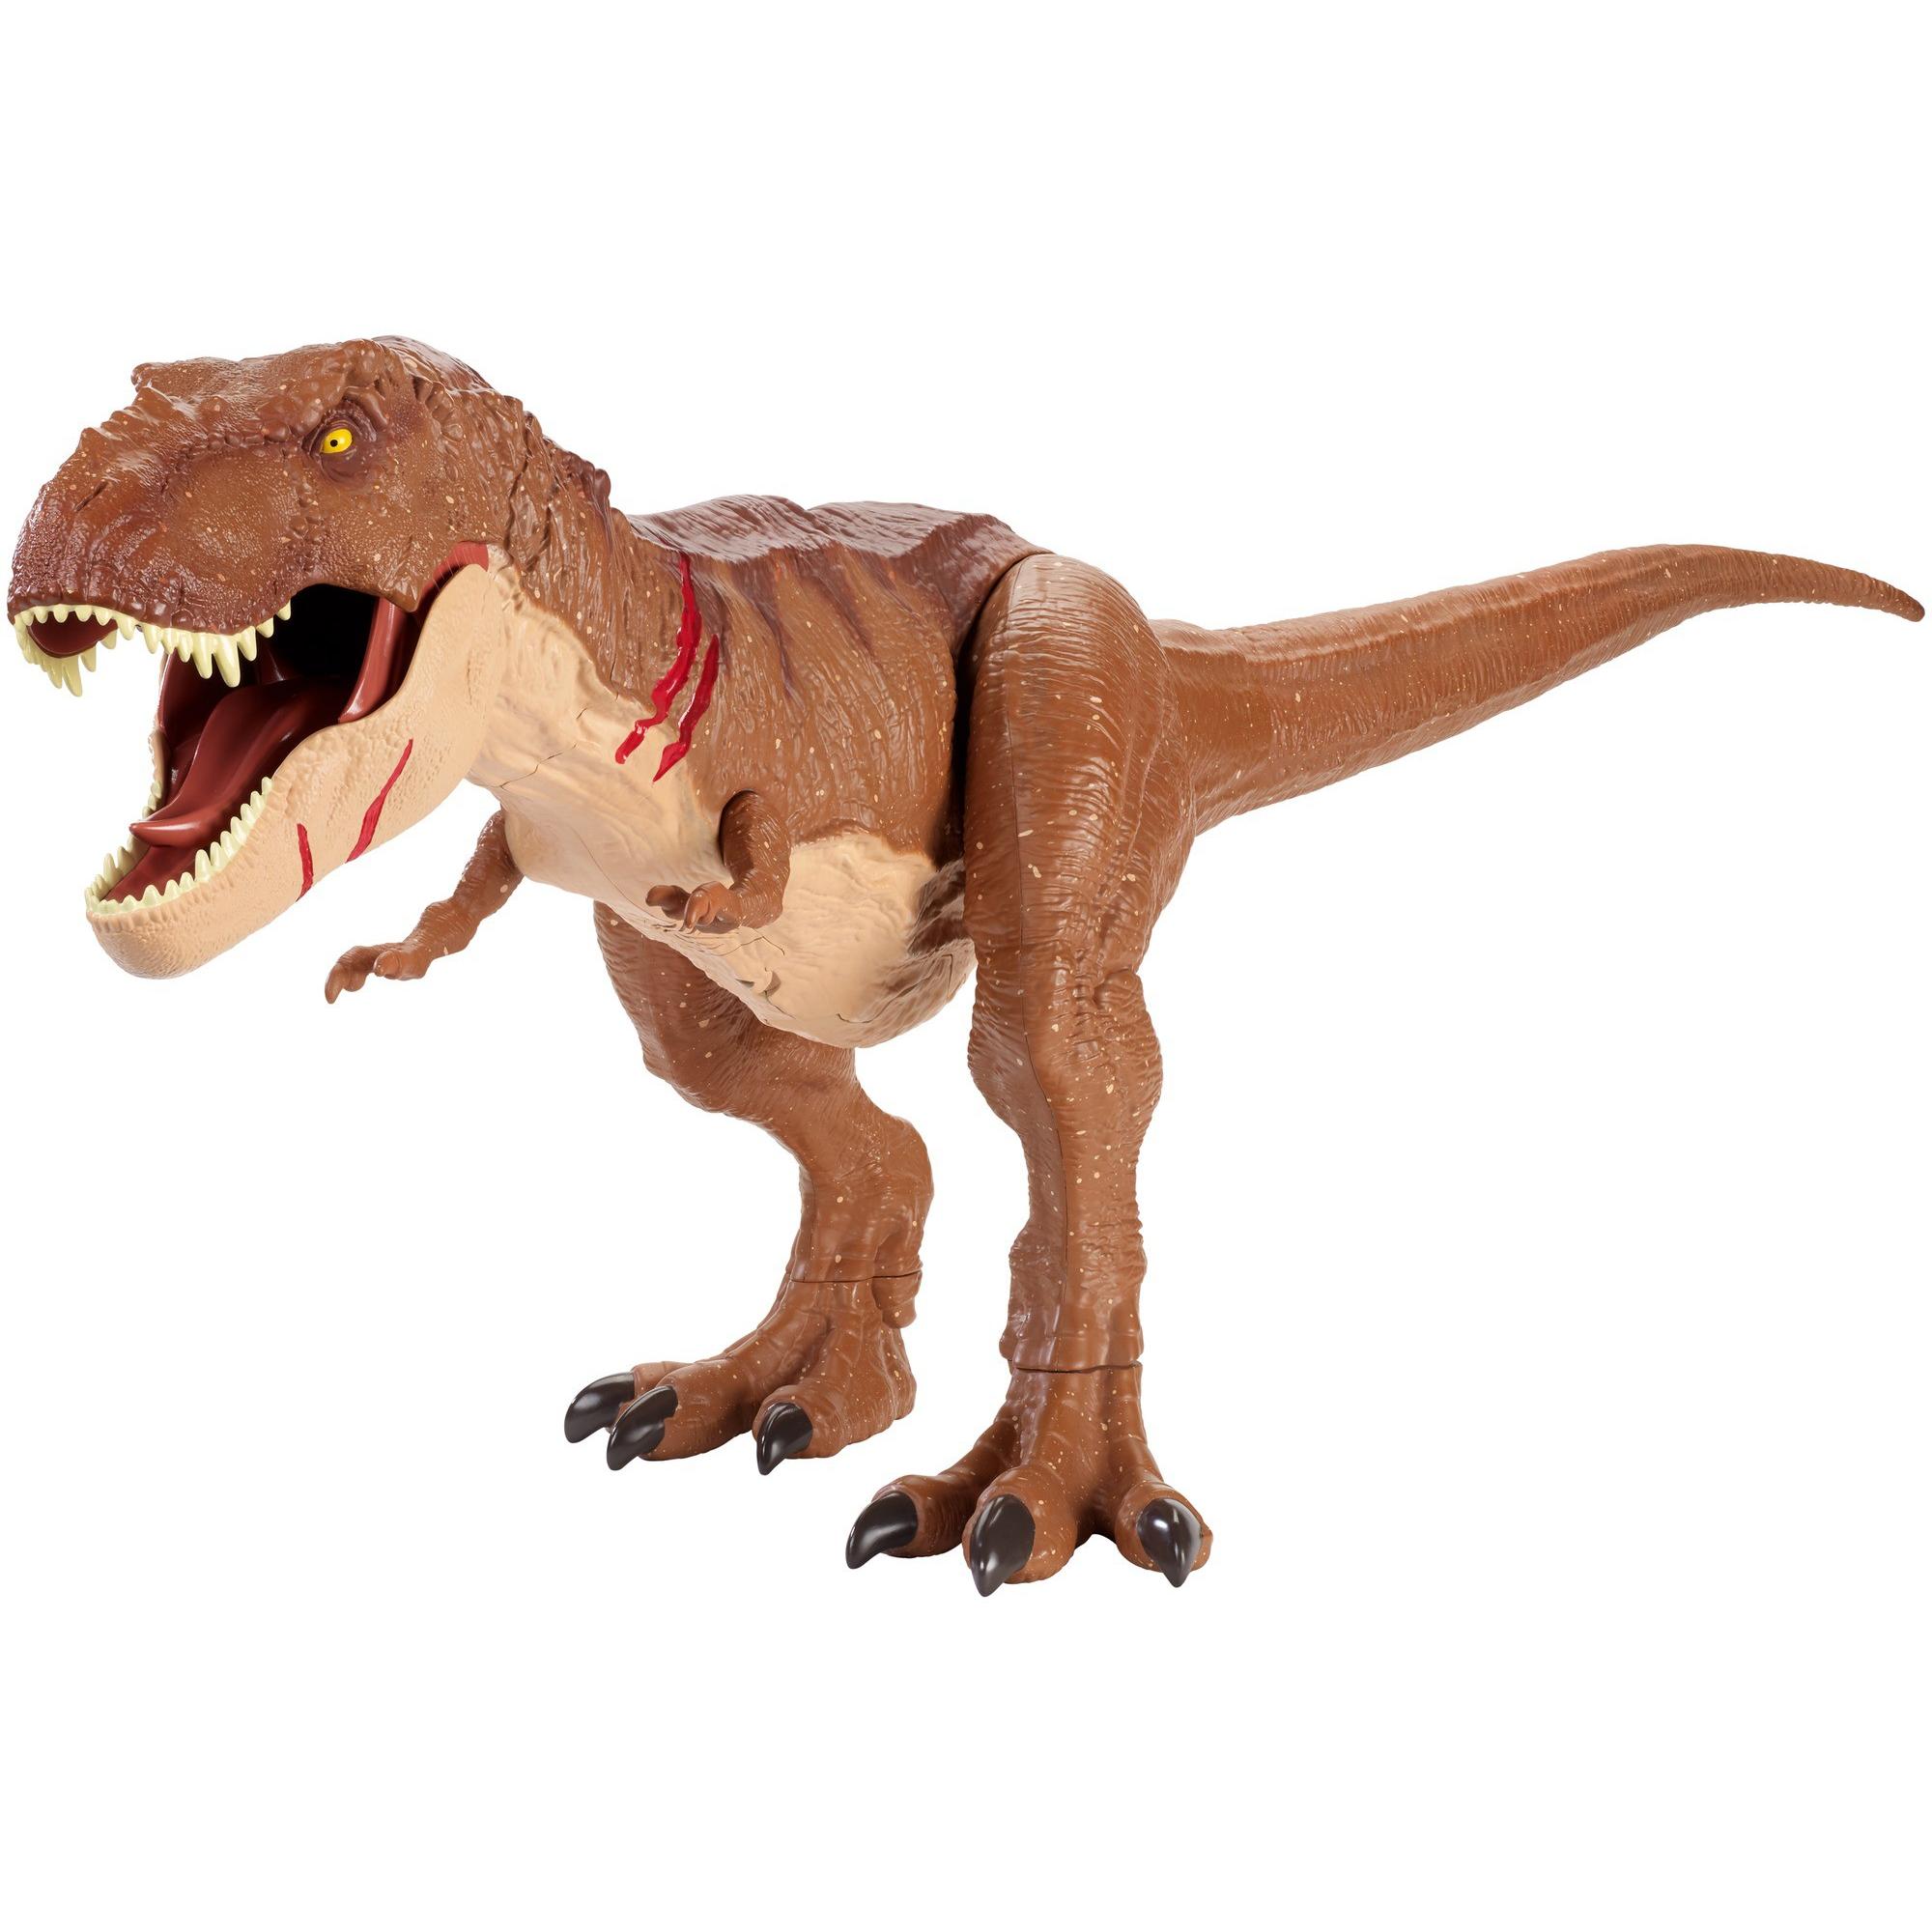 Jurassic World Battle Damage Roarin' Super Colossal Tyrannosaurus Rex - image 1 of 12